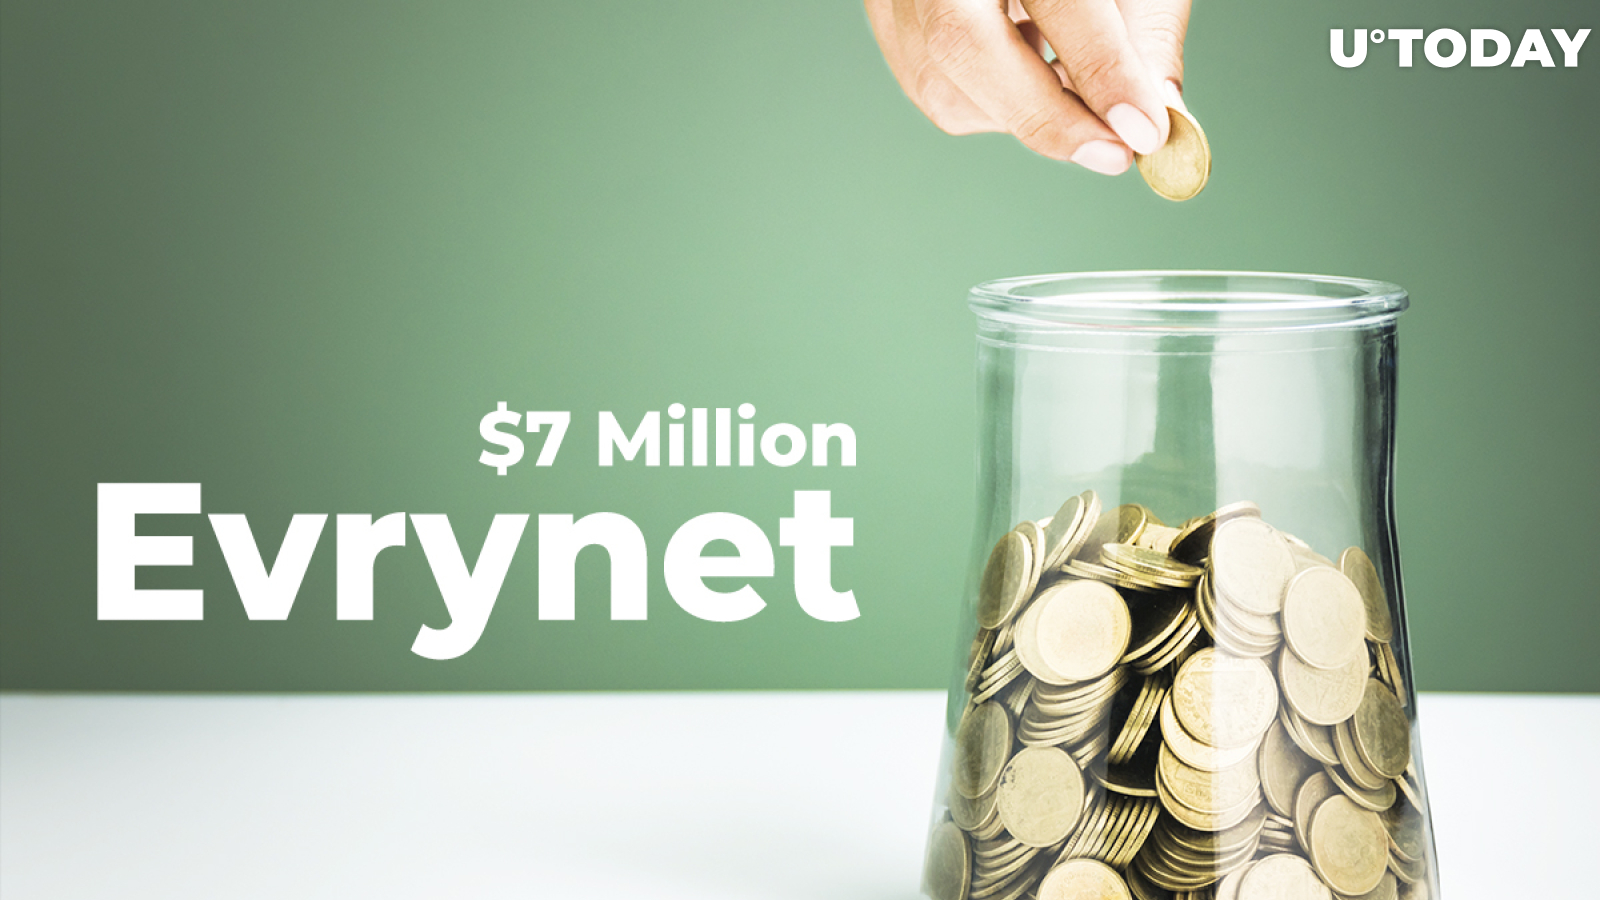 Evrynet Raises $7 Million in Successful Funding Round